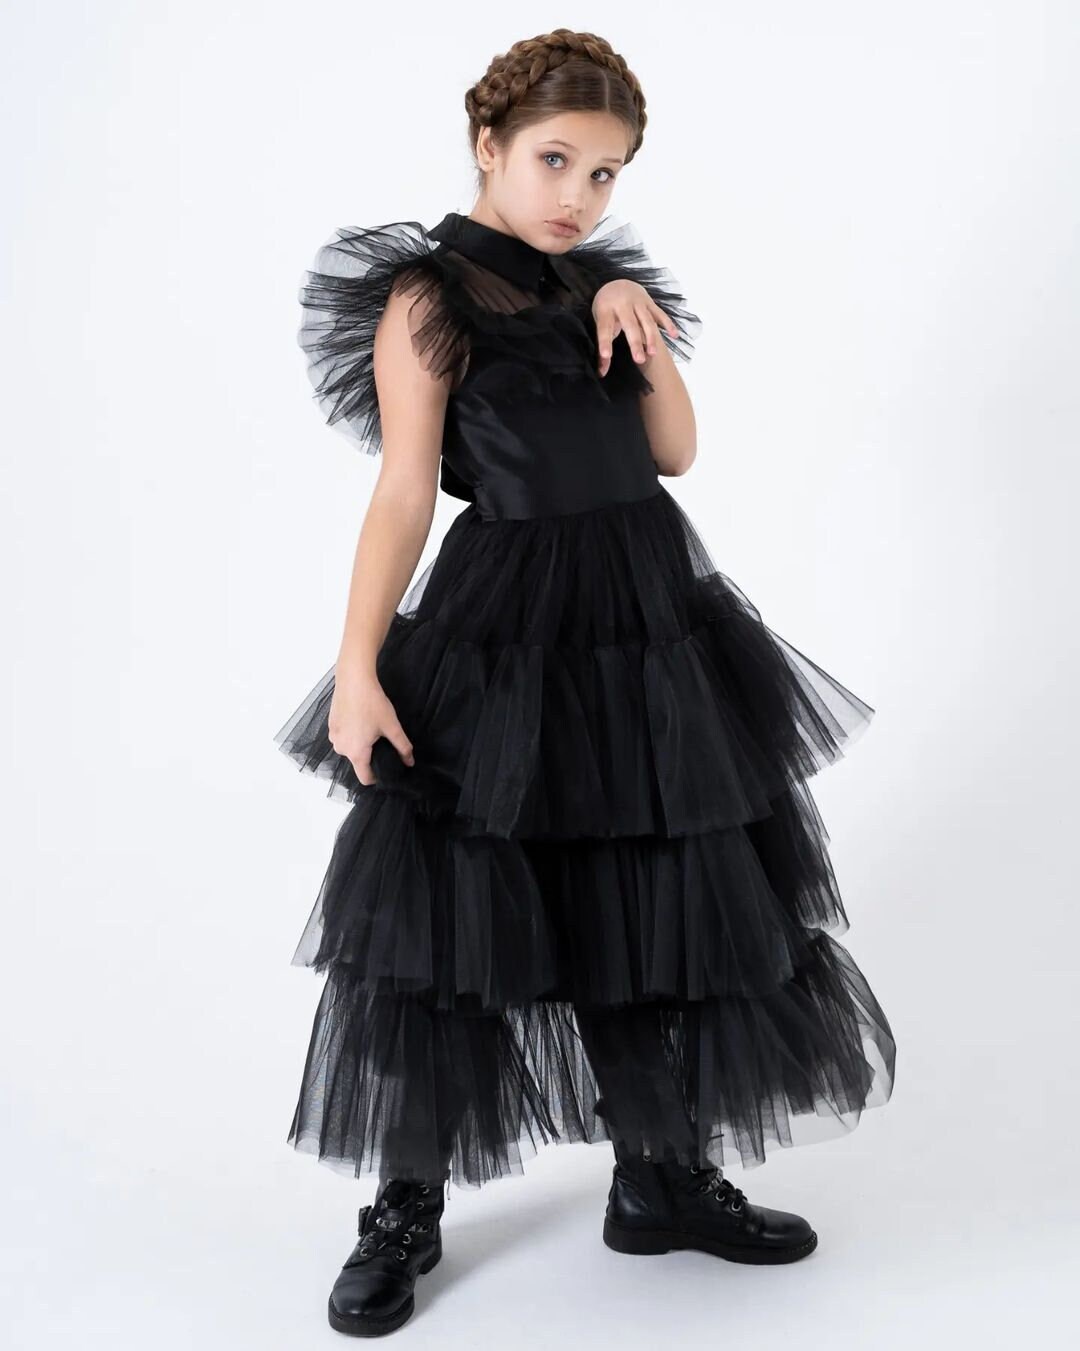 Black Dress Girls Costume Dress Black Dressoutfit Rave'n - Etsy